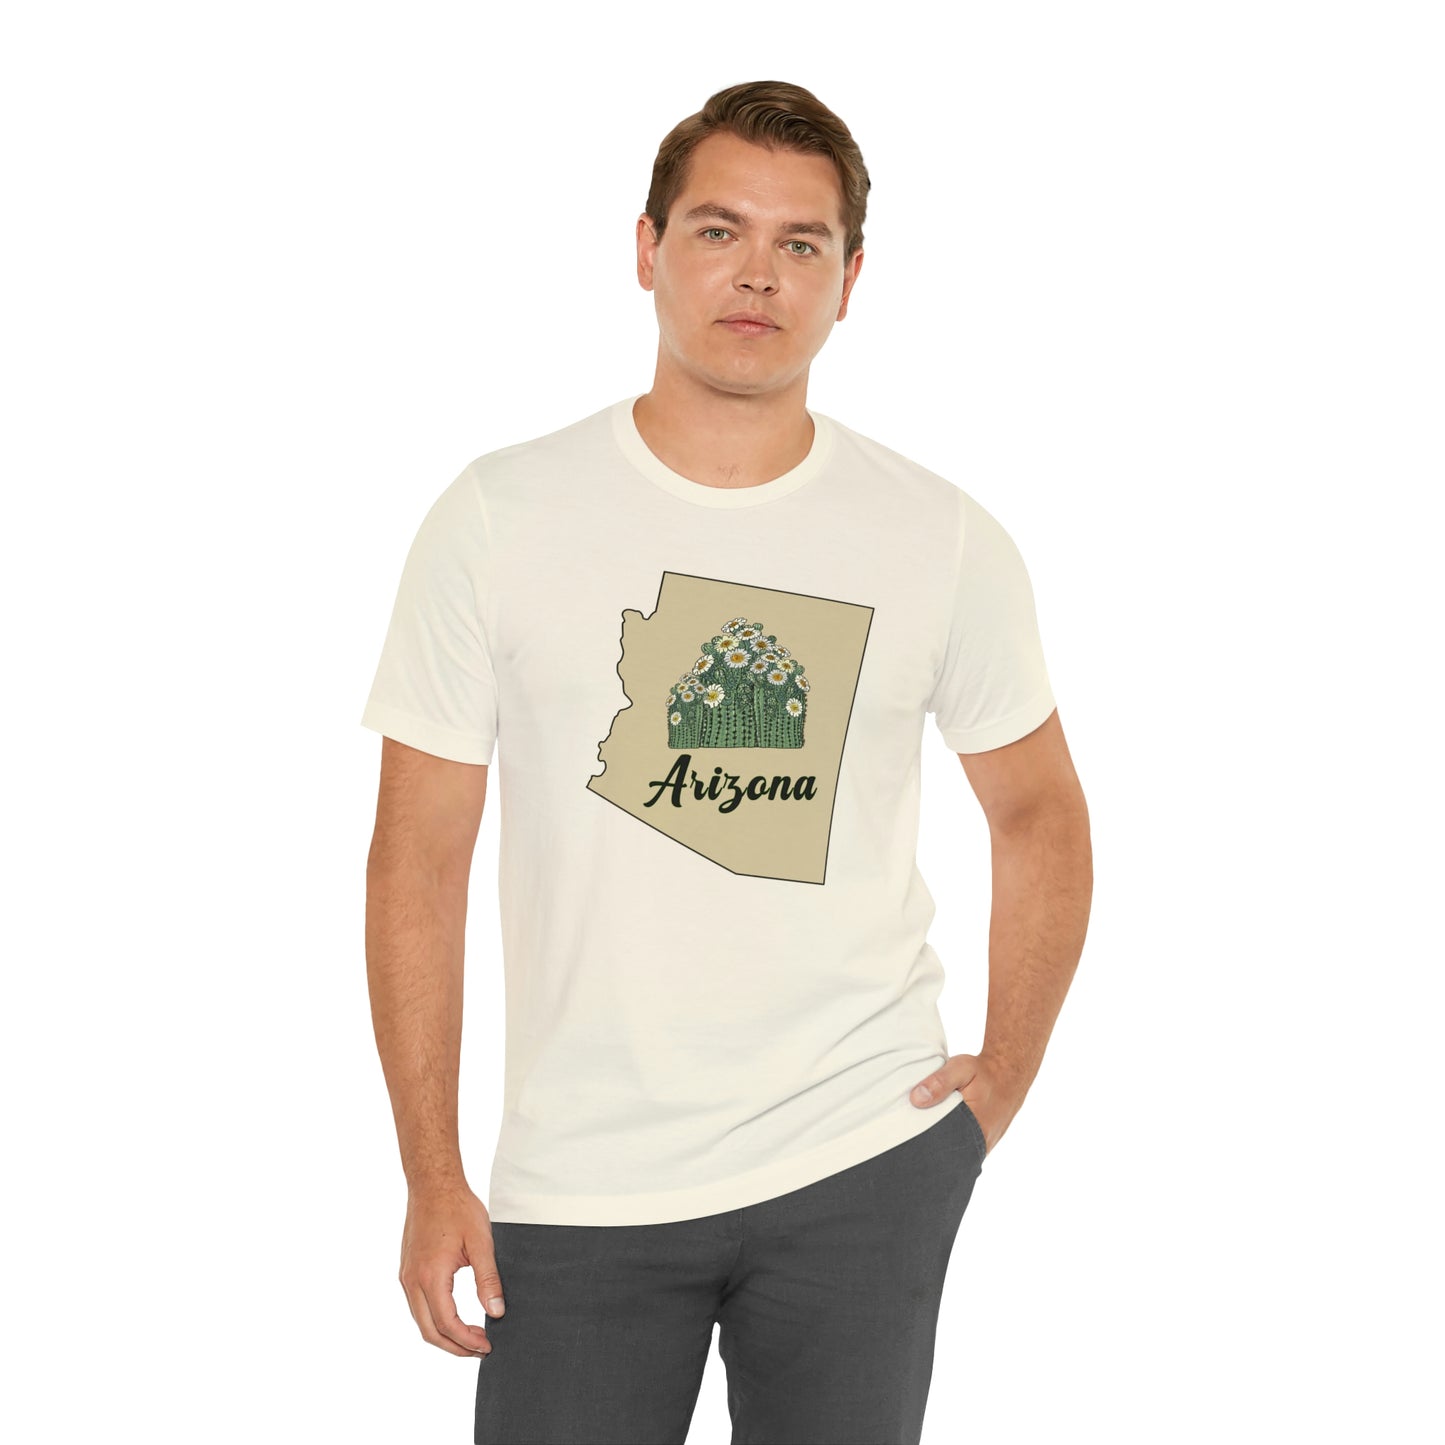 Arizona State Flower Short Sleeve T-shirt